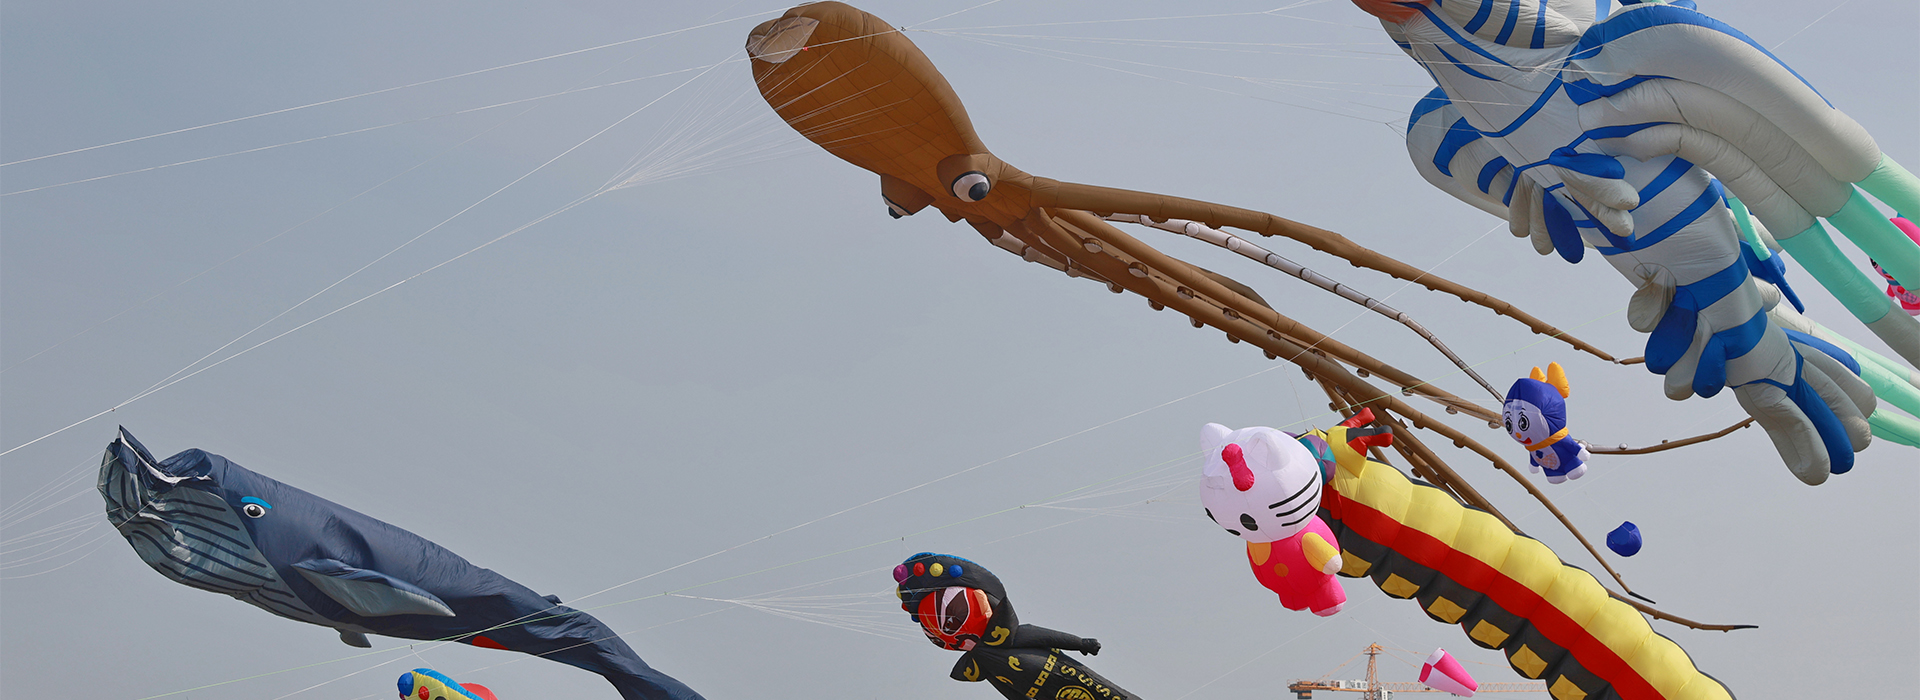 Kite festival kicks off in Rudong